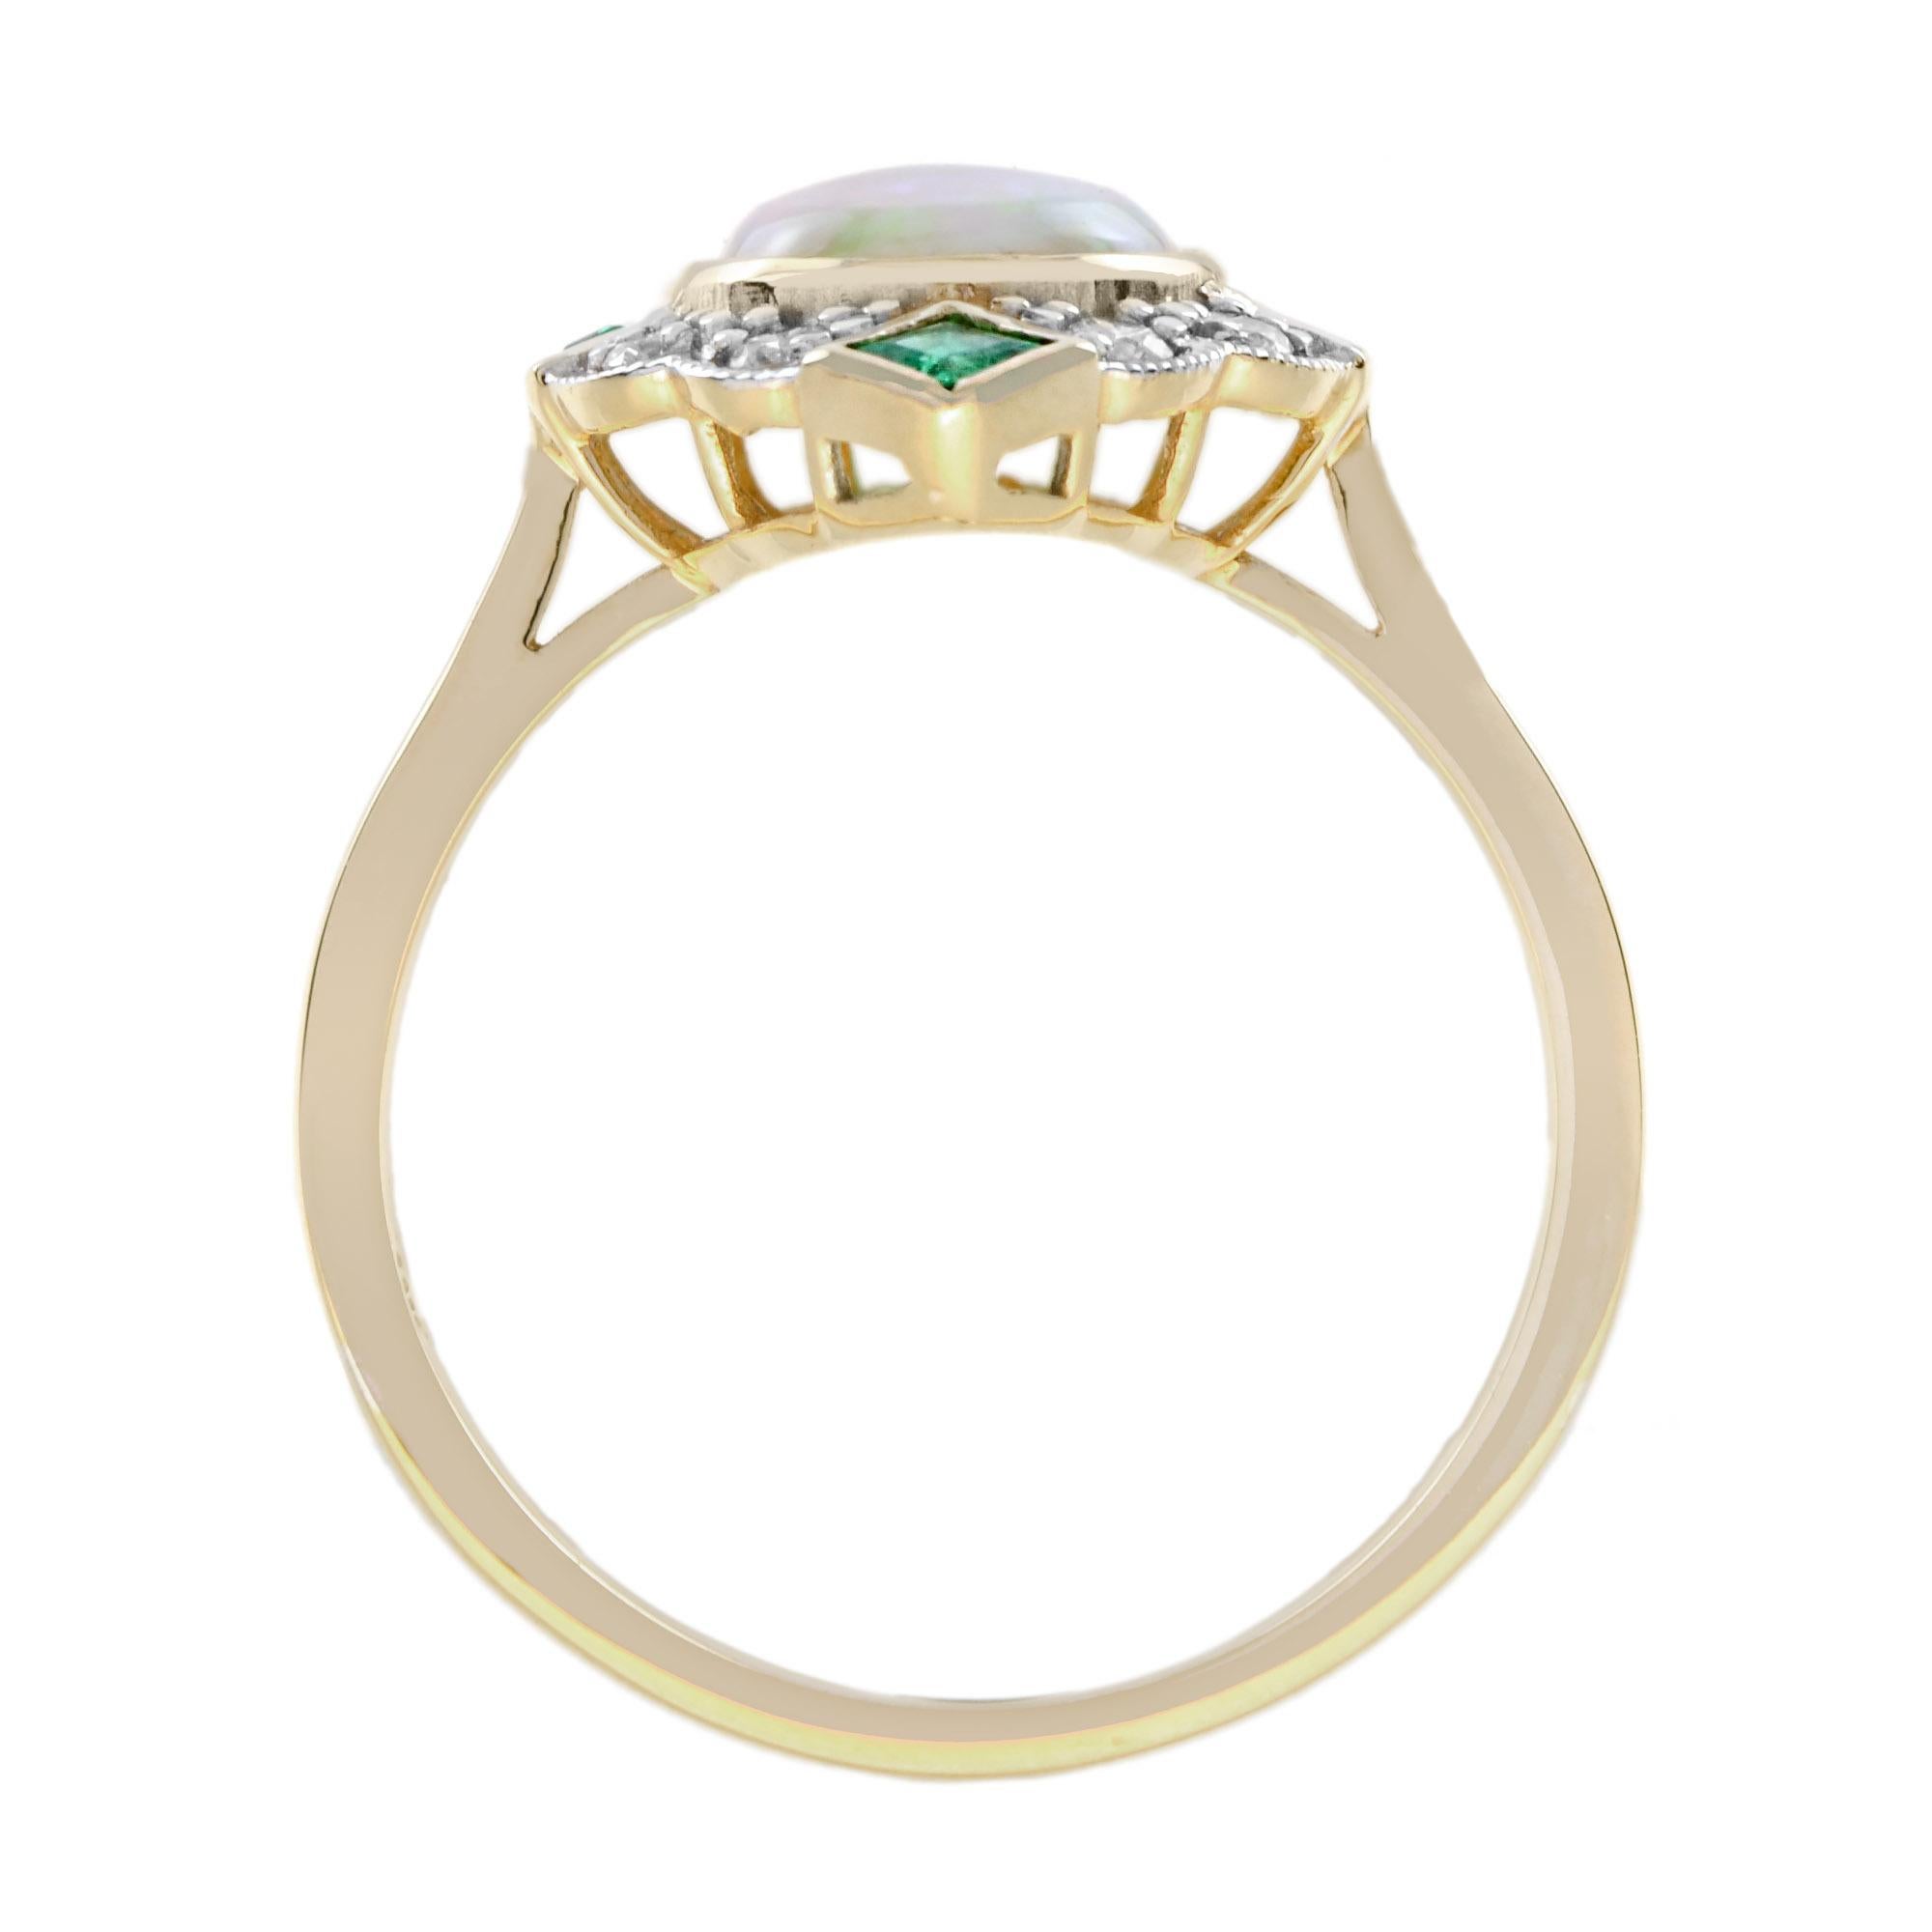 Australian Opal Emerald Diamond Art Deco Style Halo Ring in 14K Yellow Gold 1